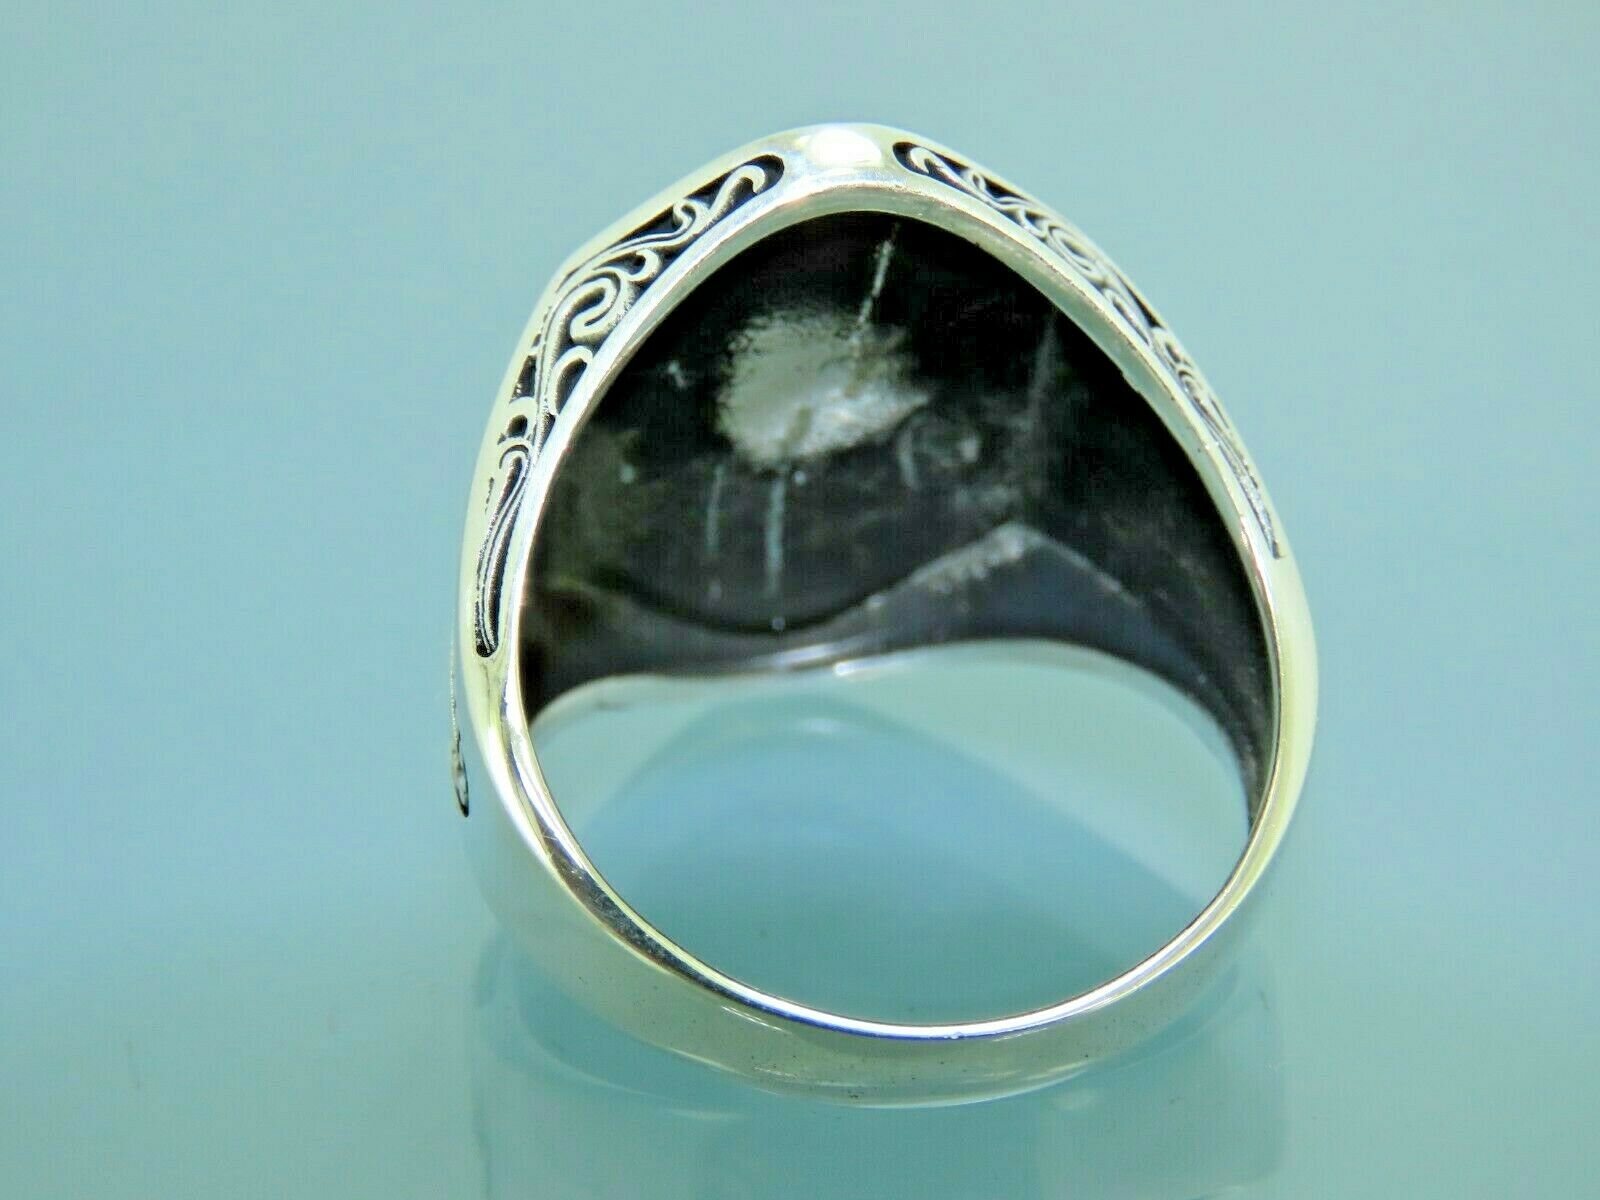 Buy J.G Women's Italian Silver Ring(10,Silver,J.G-RINGS-11) at Amazon.in